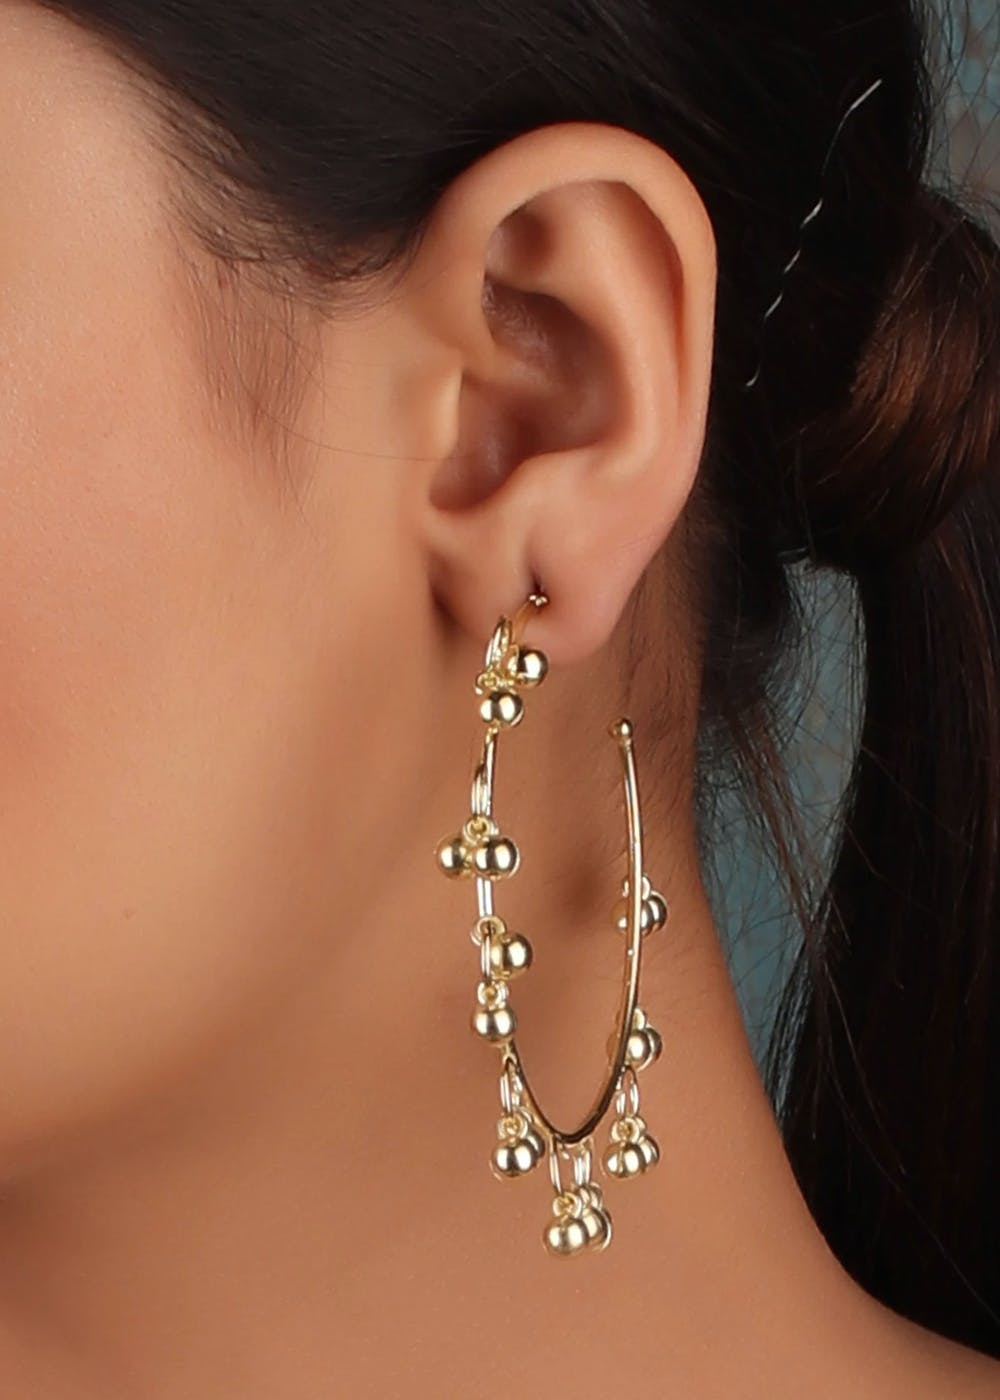 Raja Rani Hoop Earrings – Krafted with Happiness